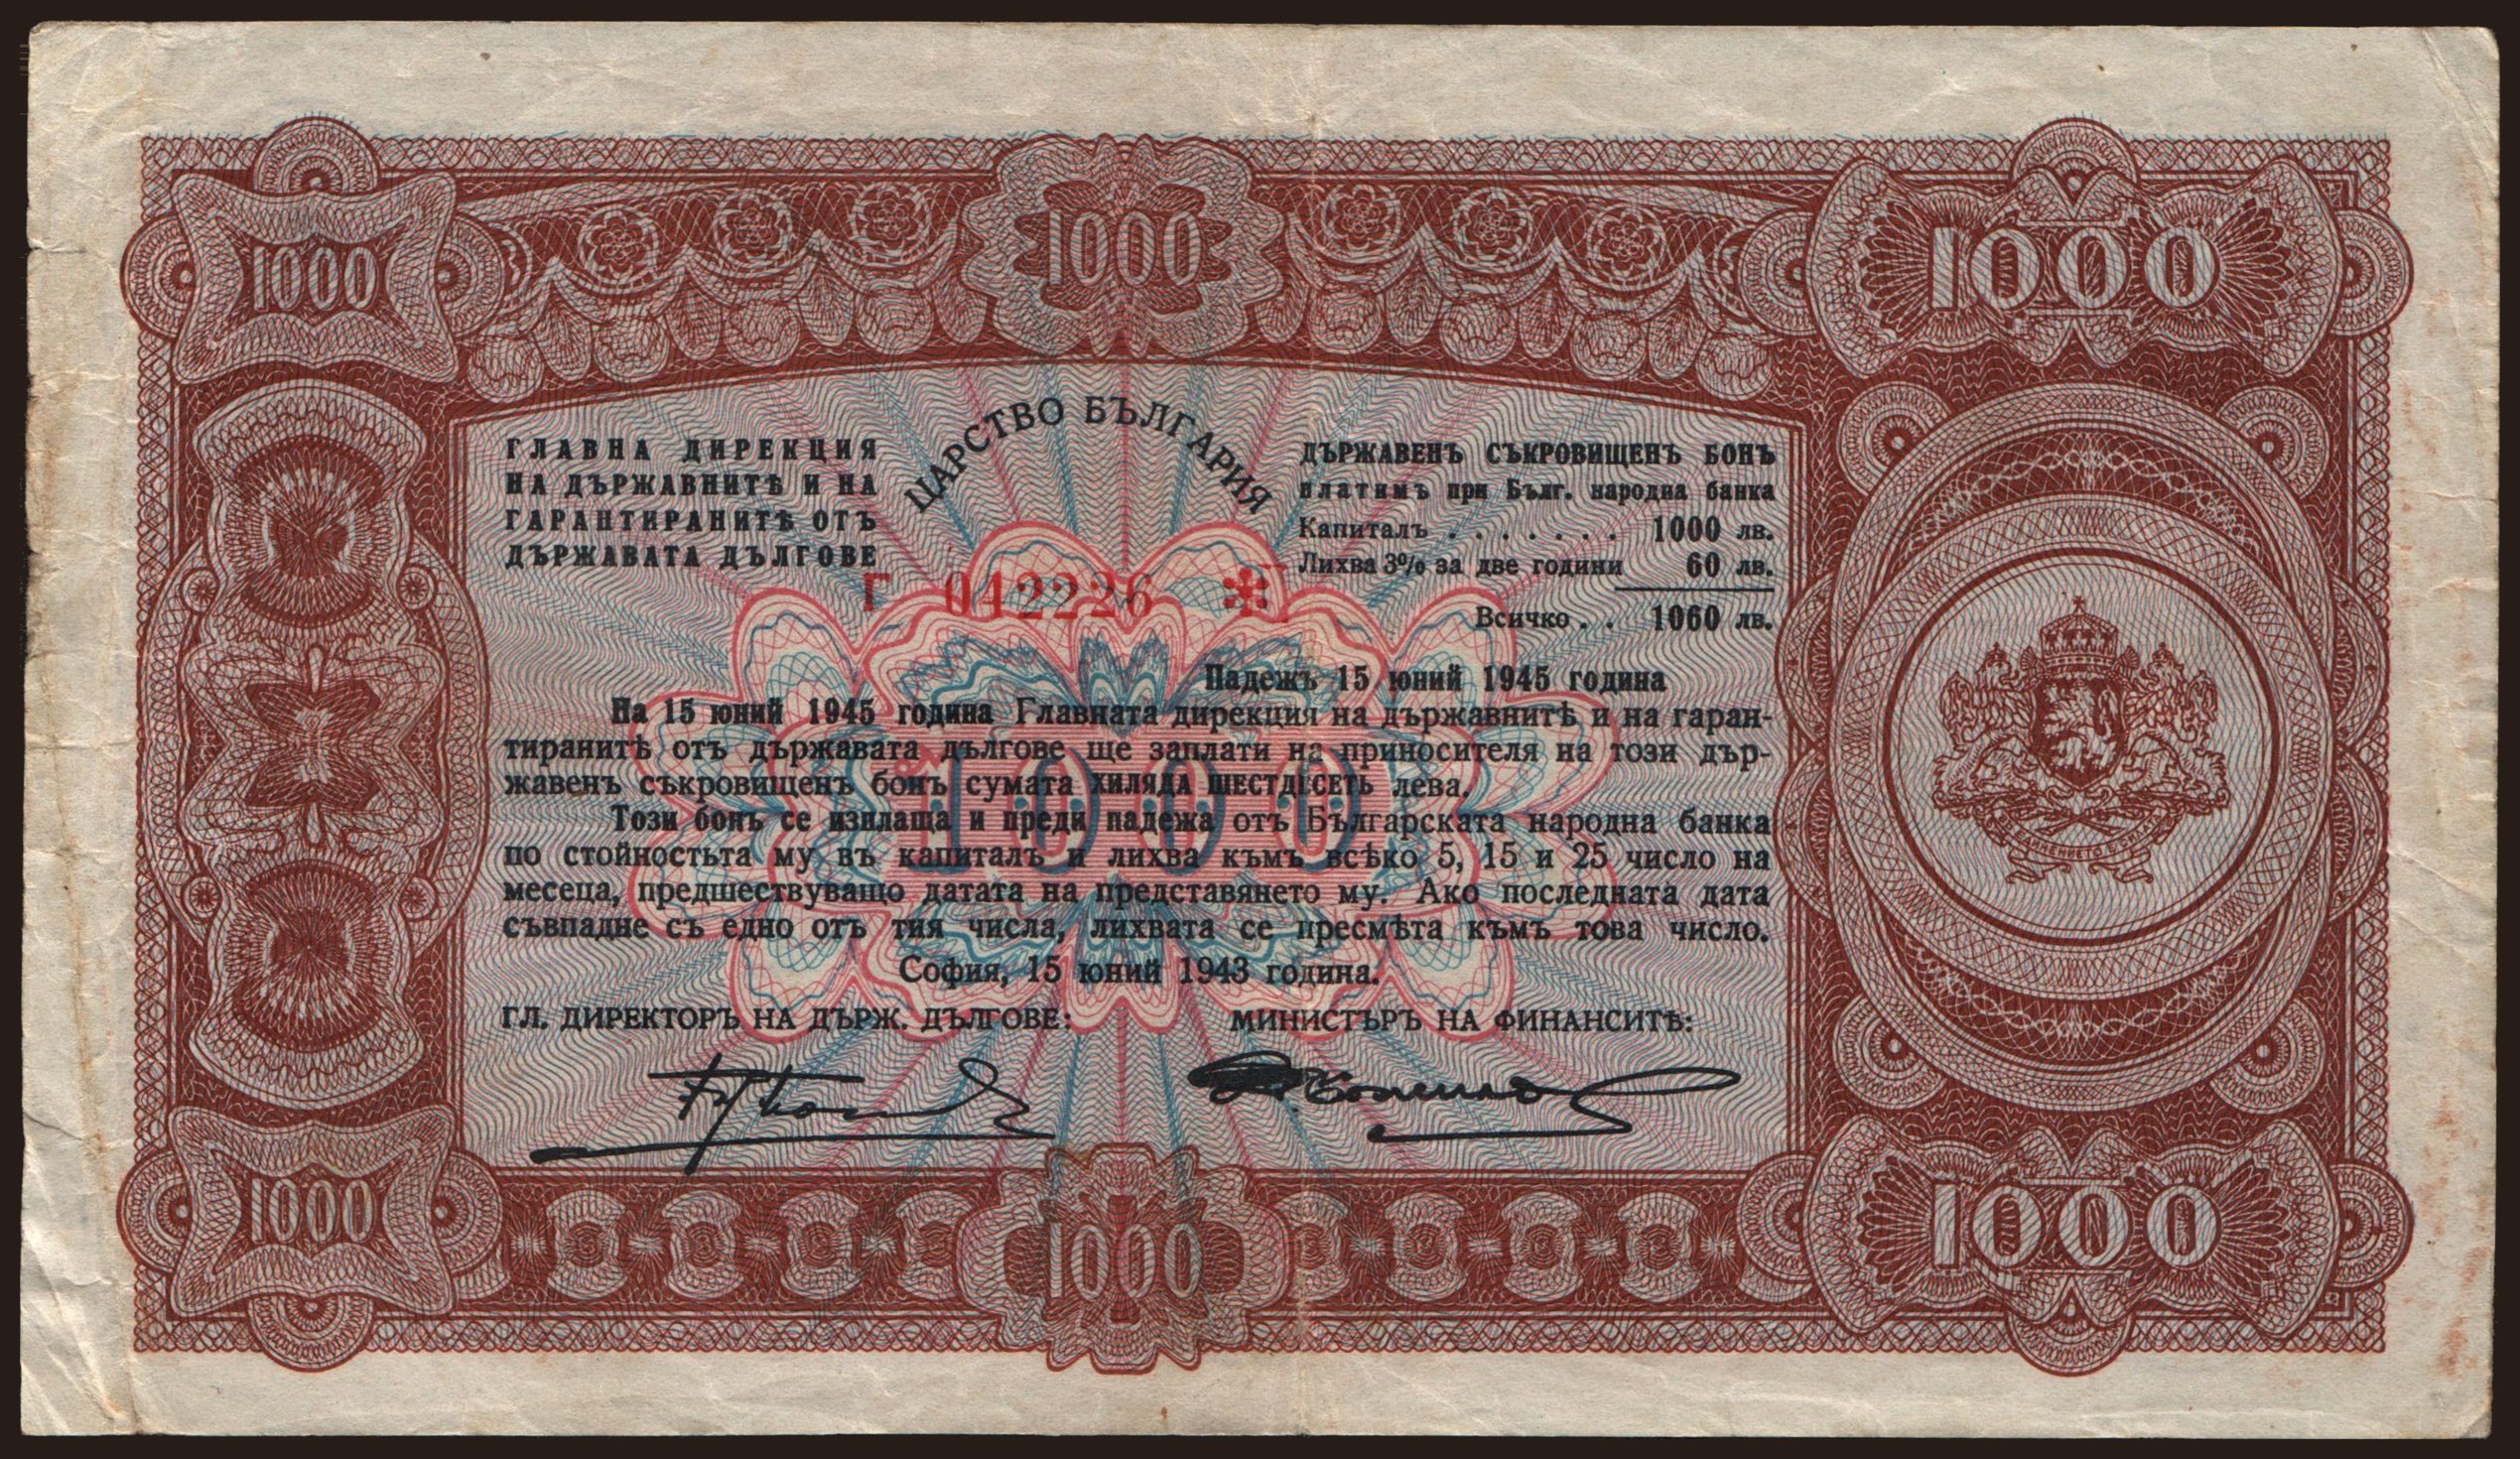 1000 leva, 1943